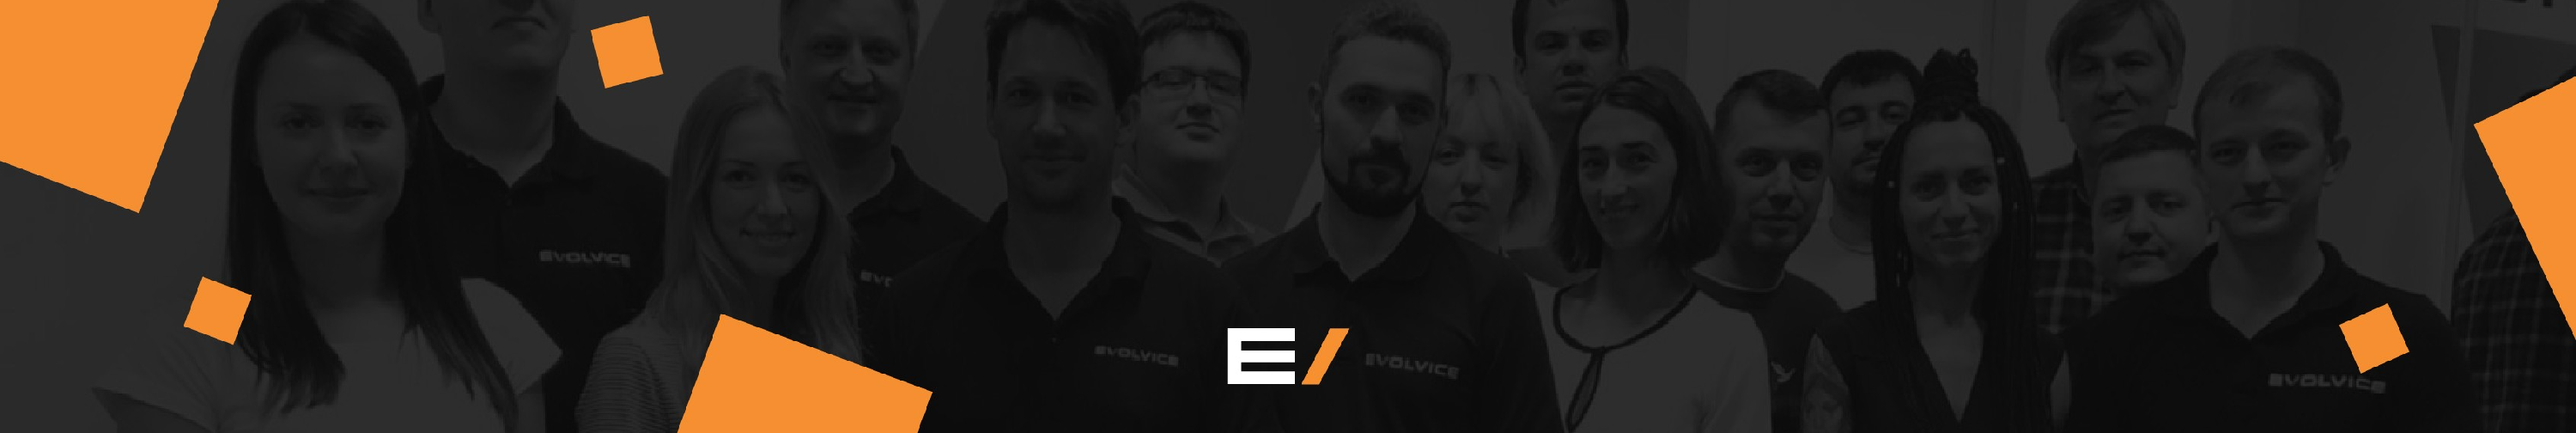 Evolvice GmbH background